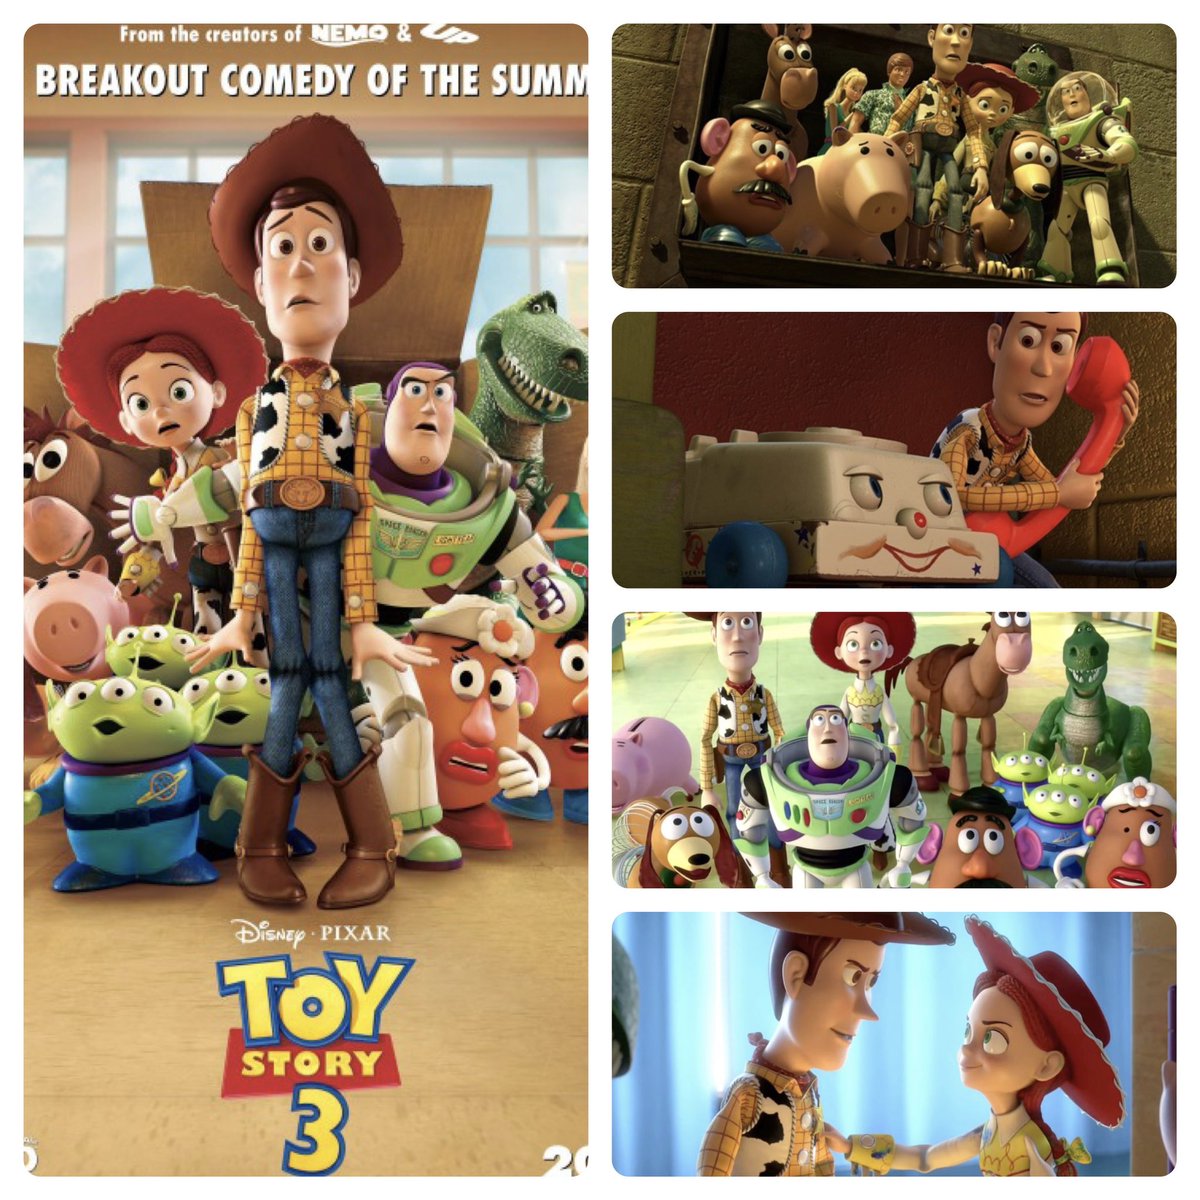 Toy Story 3 celebrates it's 13rd anniversary today
#toystoryfan #toystory3 #woodytoystory #buzzlightyear #jessietoystory #lotsohugginbear #toystoryalien #mrpotatohead #slinkydog #mrspotatohead #rextoystory #hammtoystory #pixar #pixaranimation #pixaranimationstudios #pixarfan